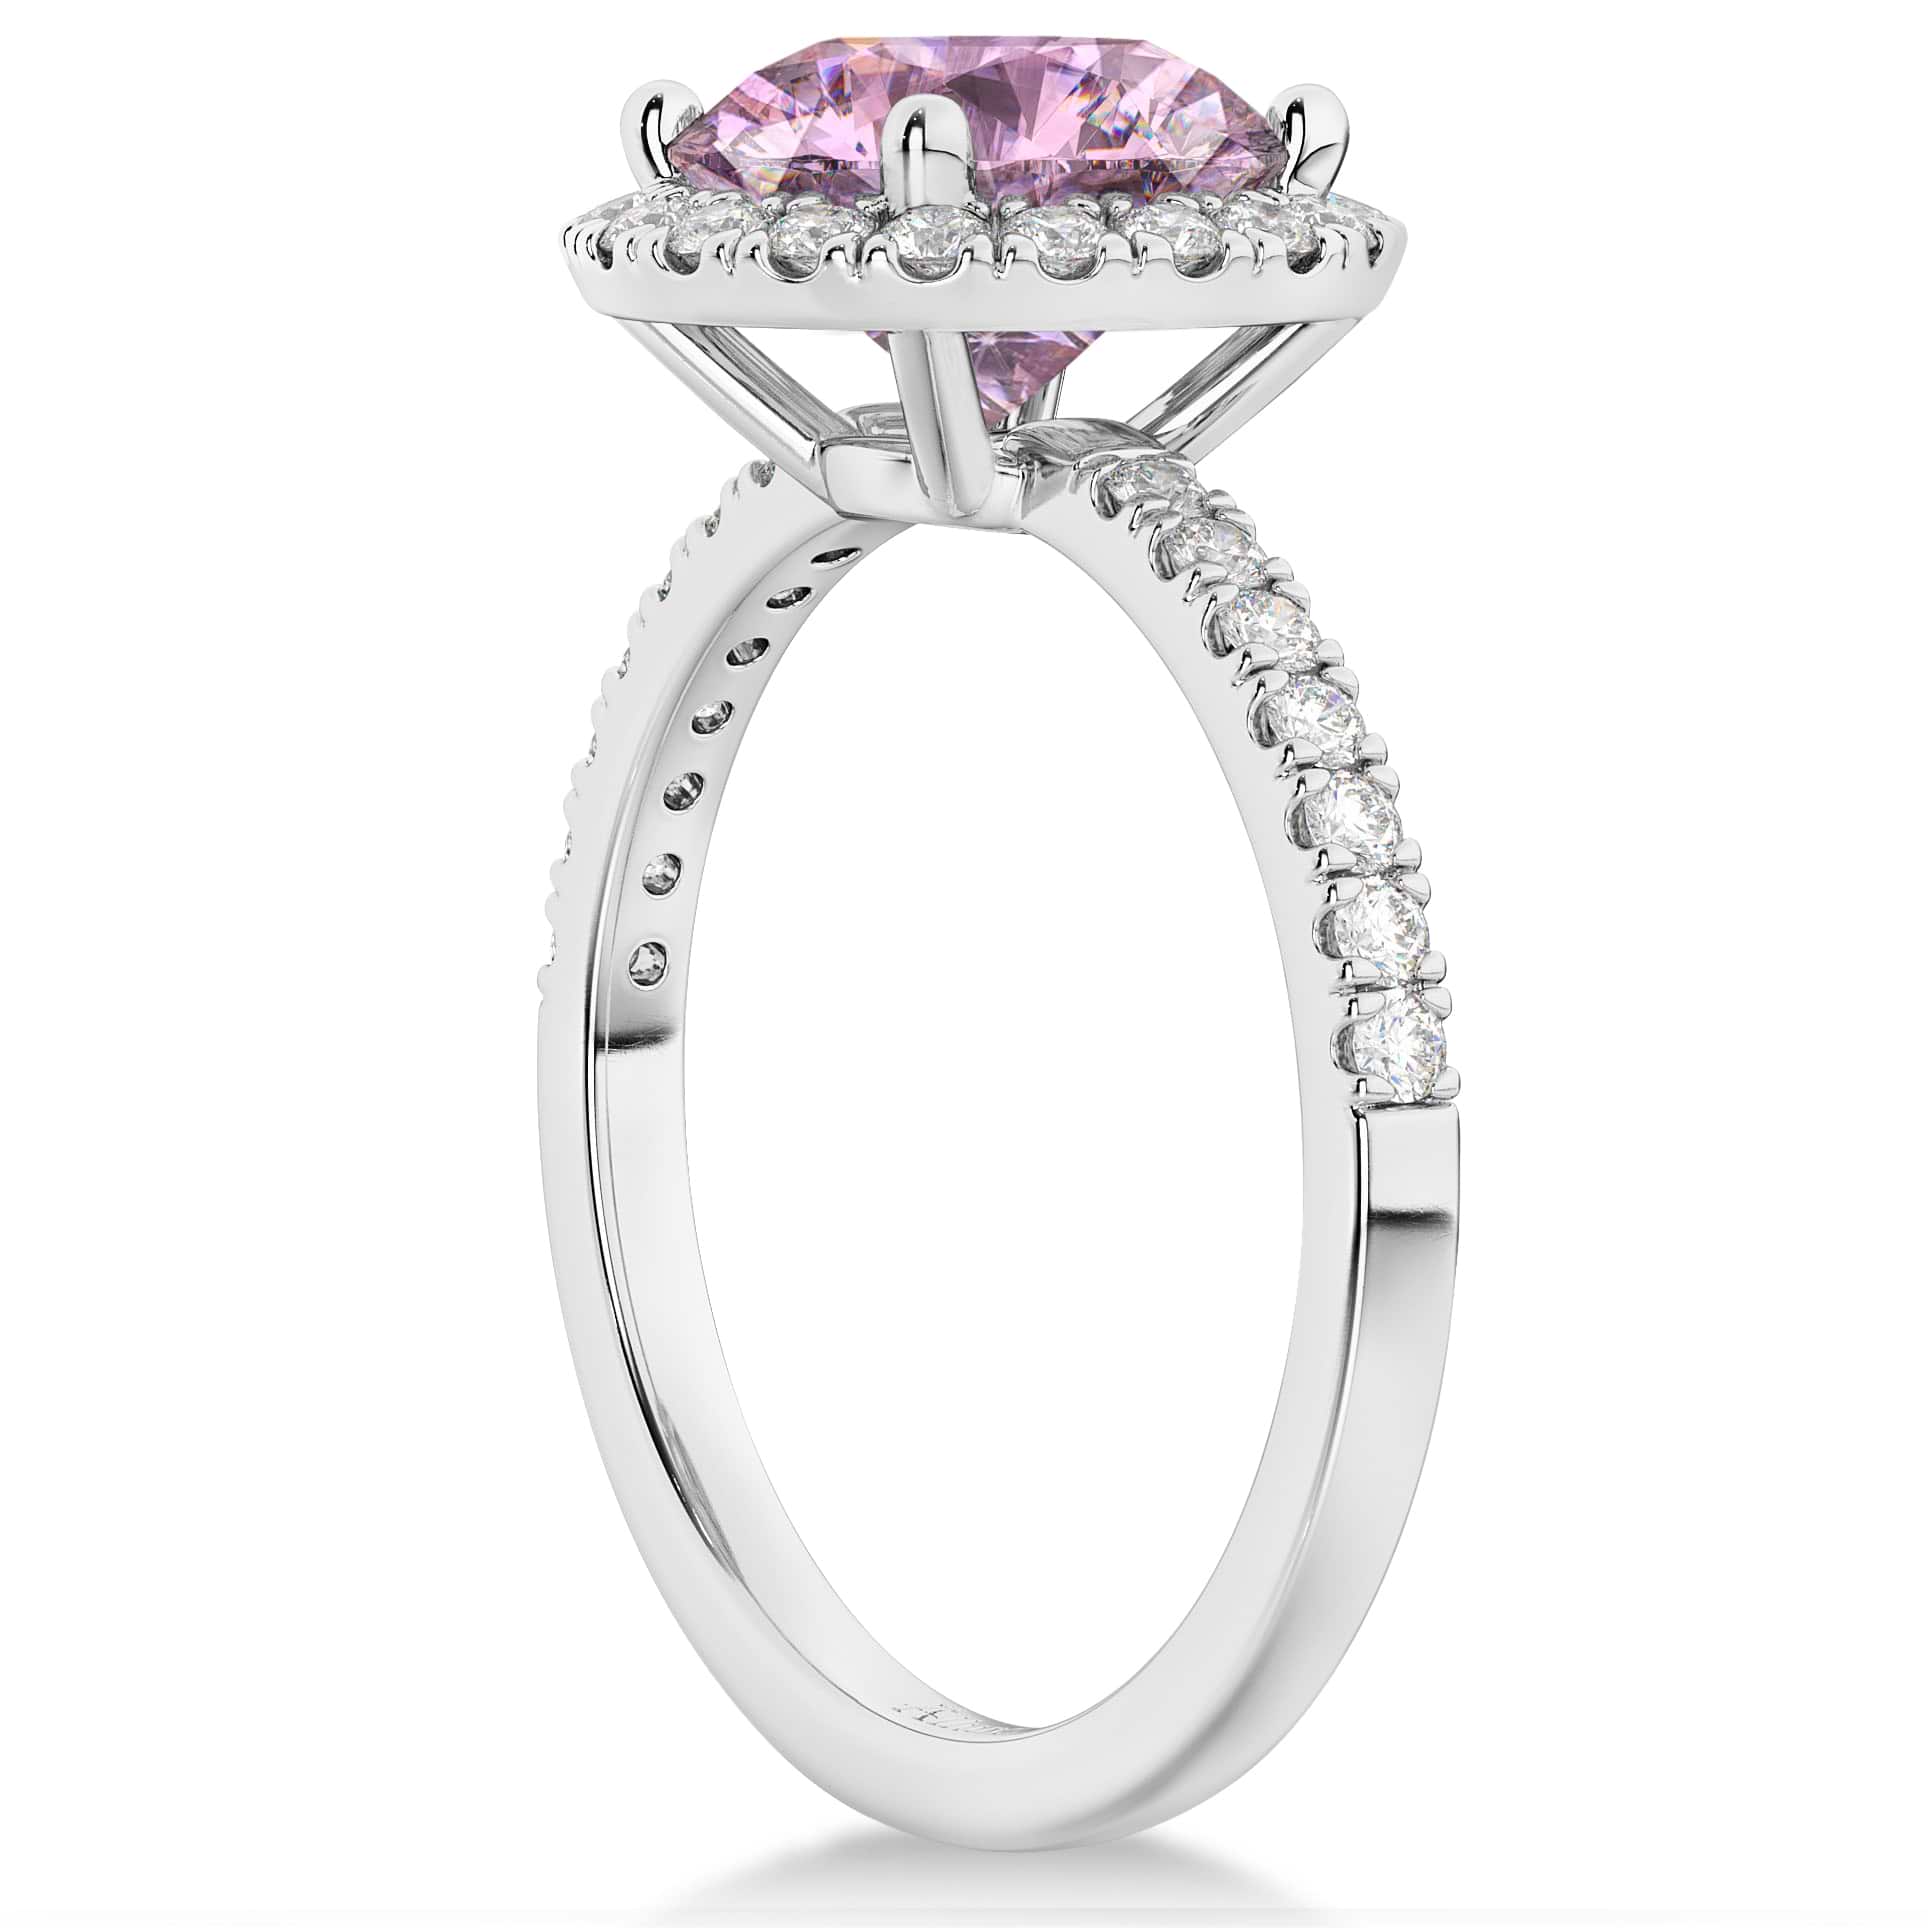 Halo Pink Moissanite & Diamond Engagement Ring Palladium 2.10ct